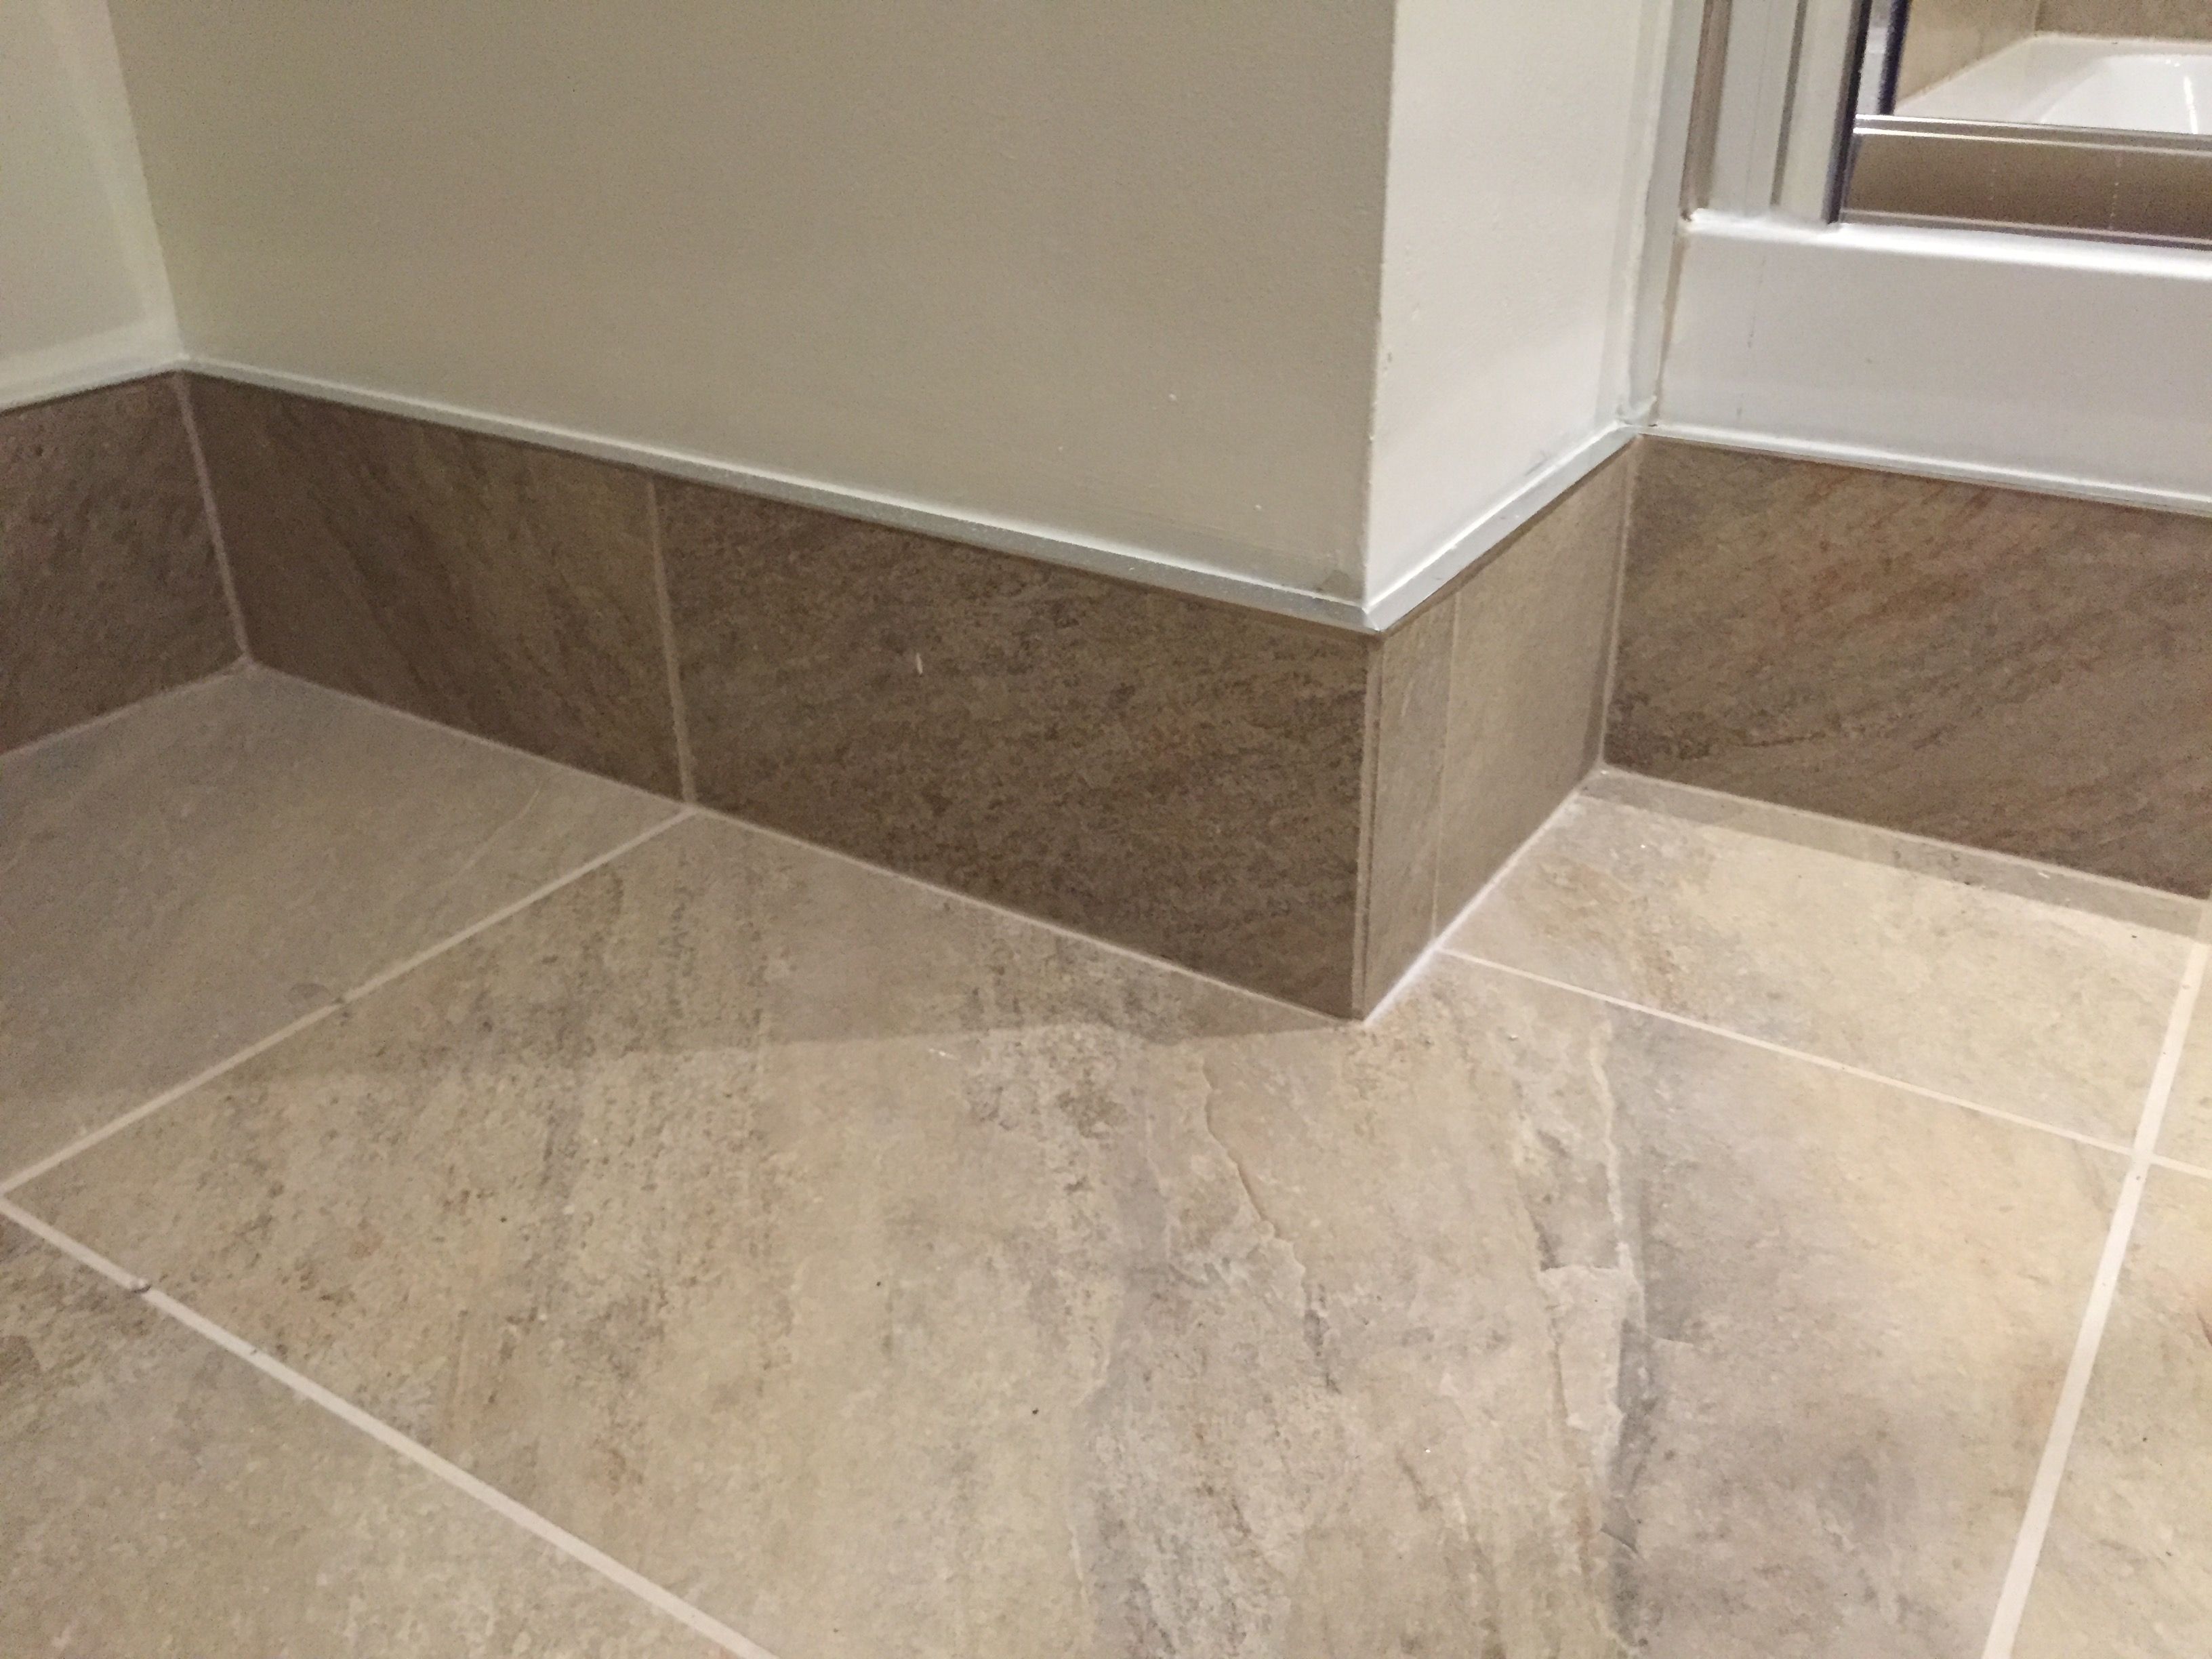 img/finish-edge-bathroom-tile.jpg